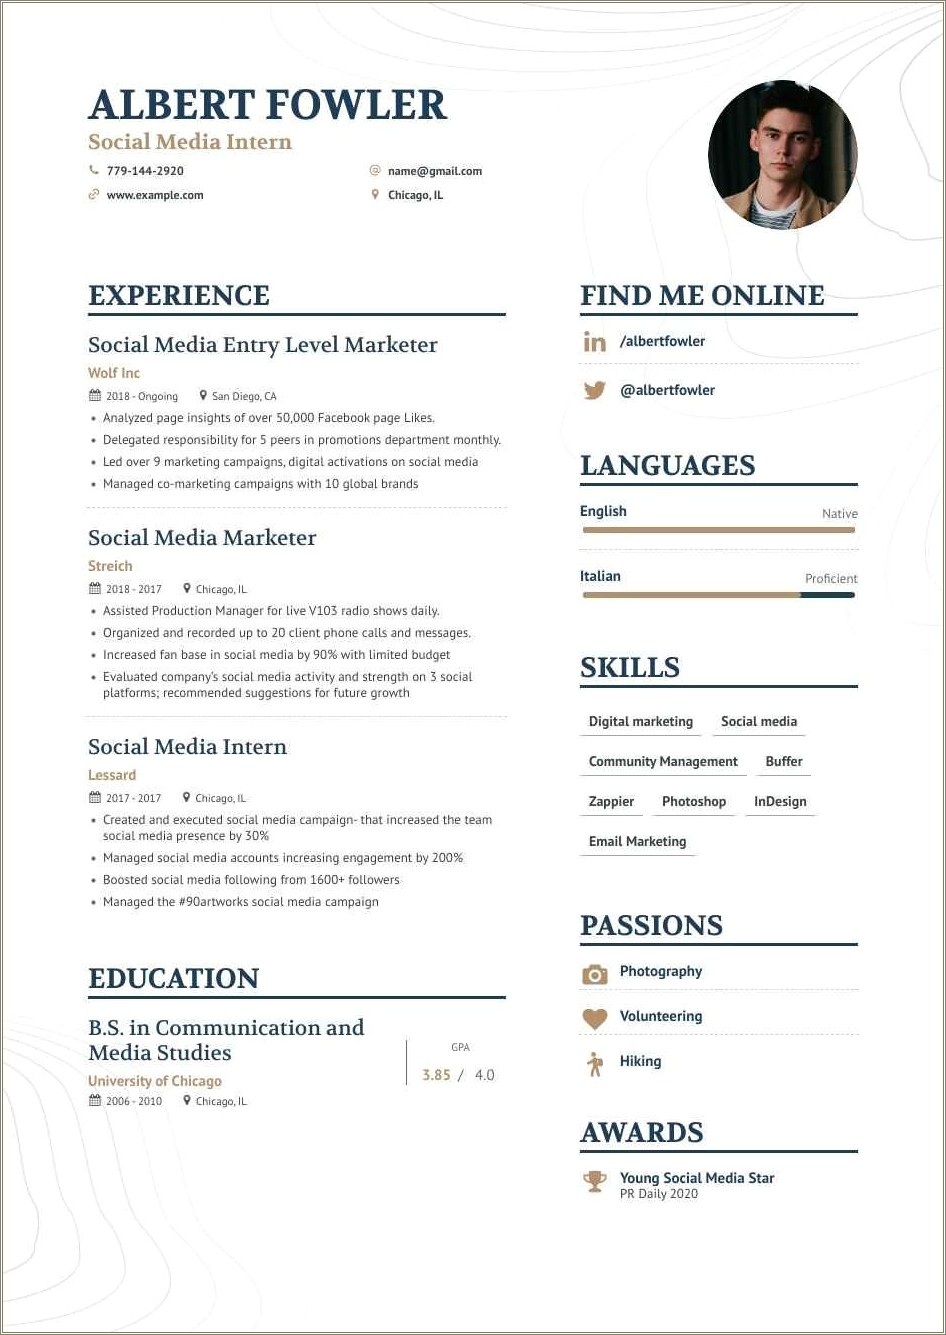 Adobe Campaign Specialist Job Description Resume